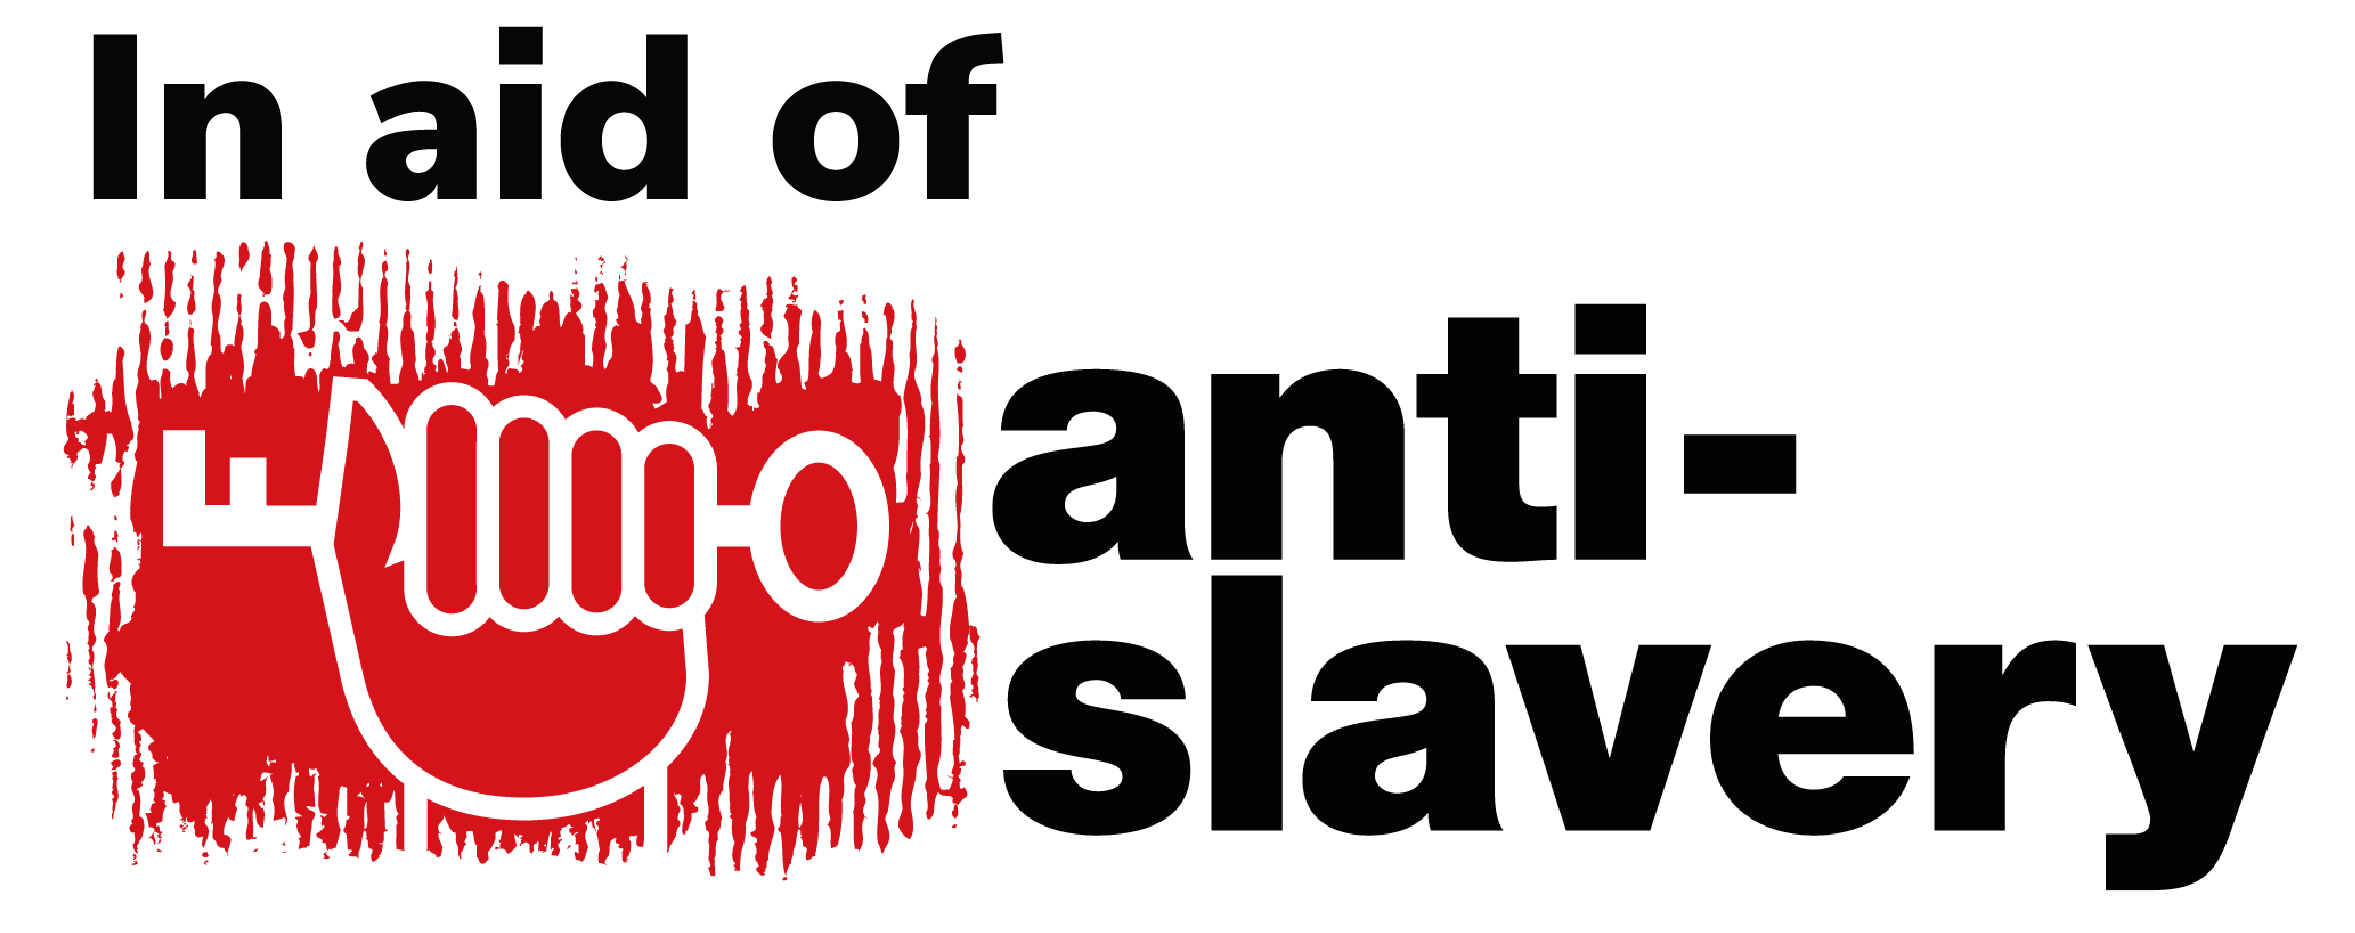 Anti Slavery International